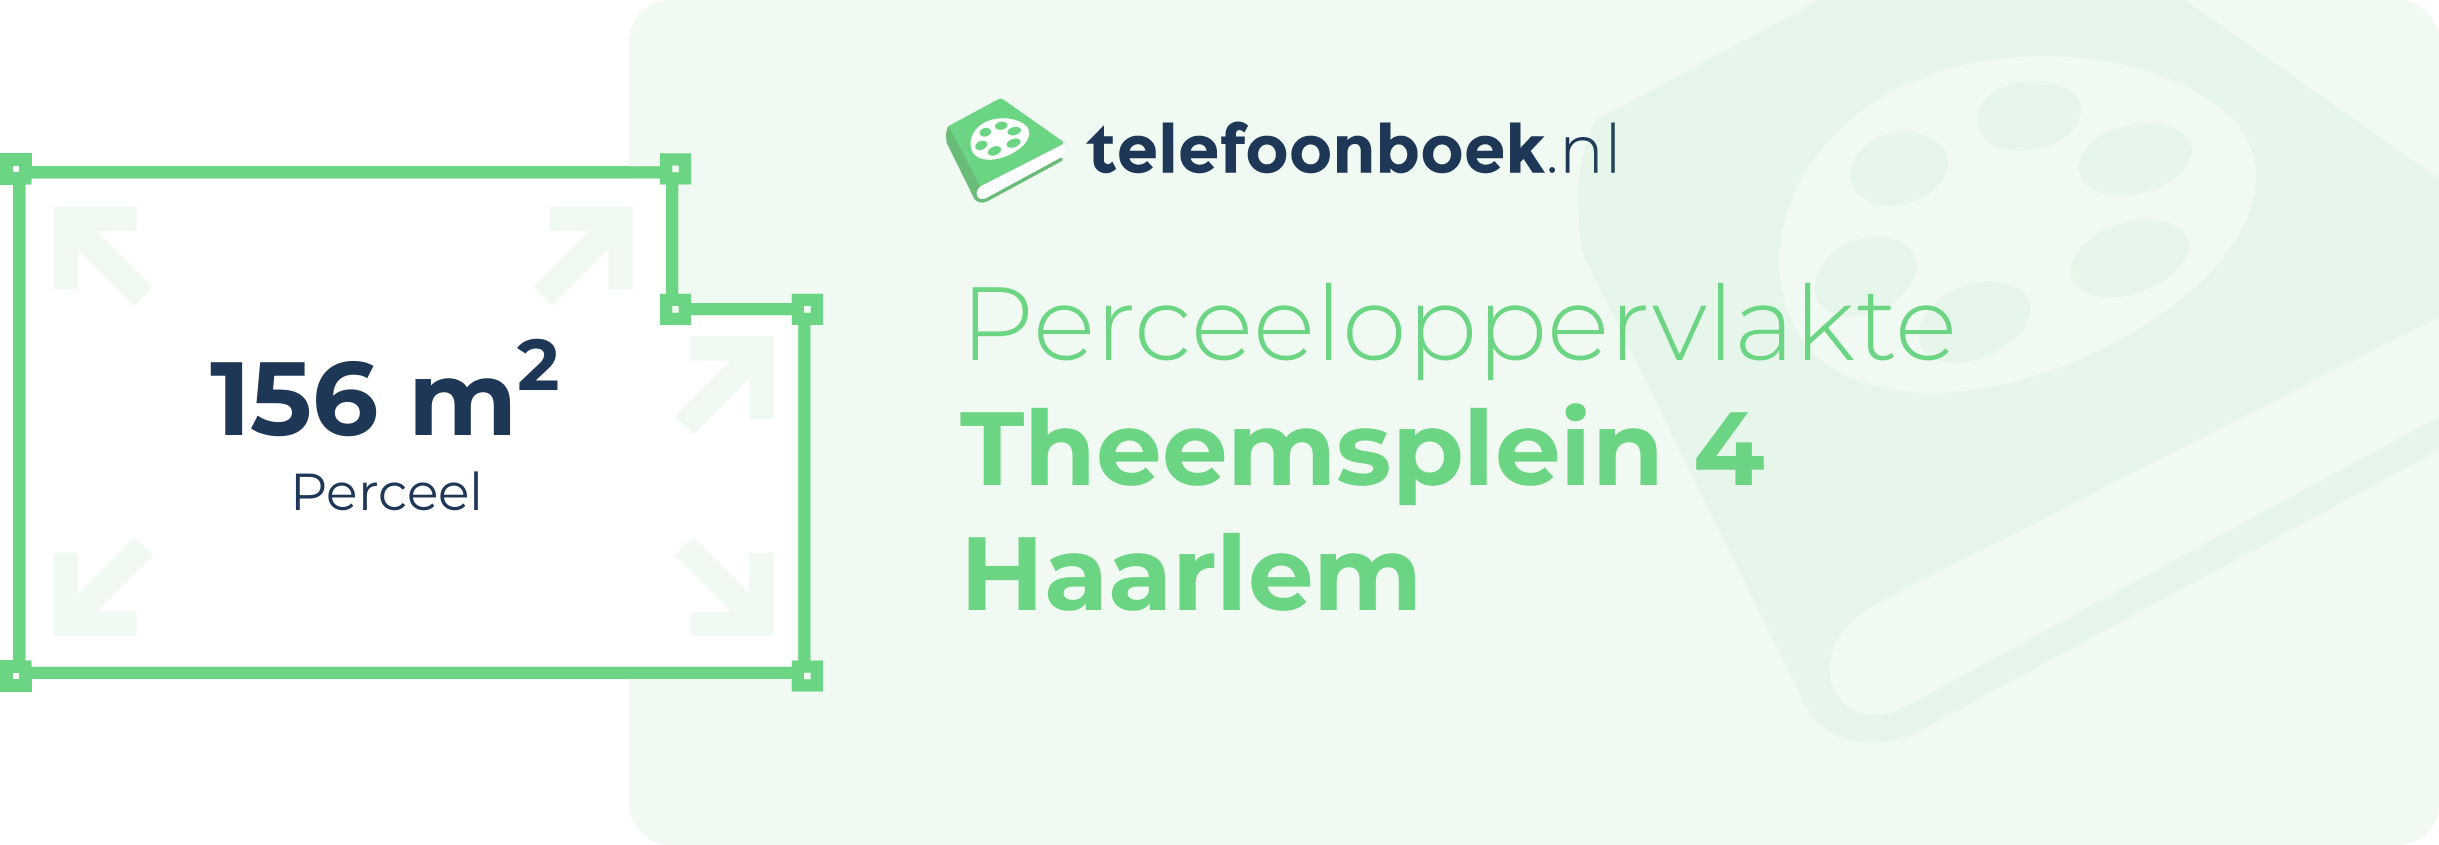 Perceeloppervlakte Theemsplein 4 Haarlem